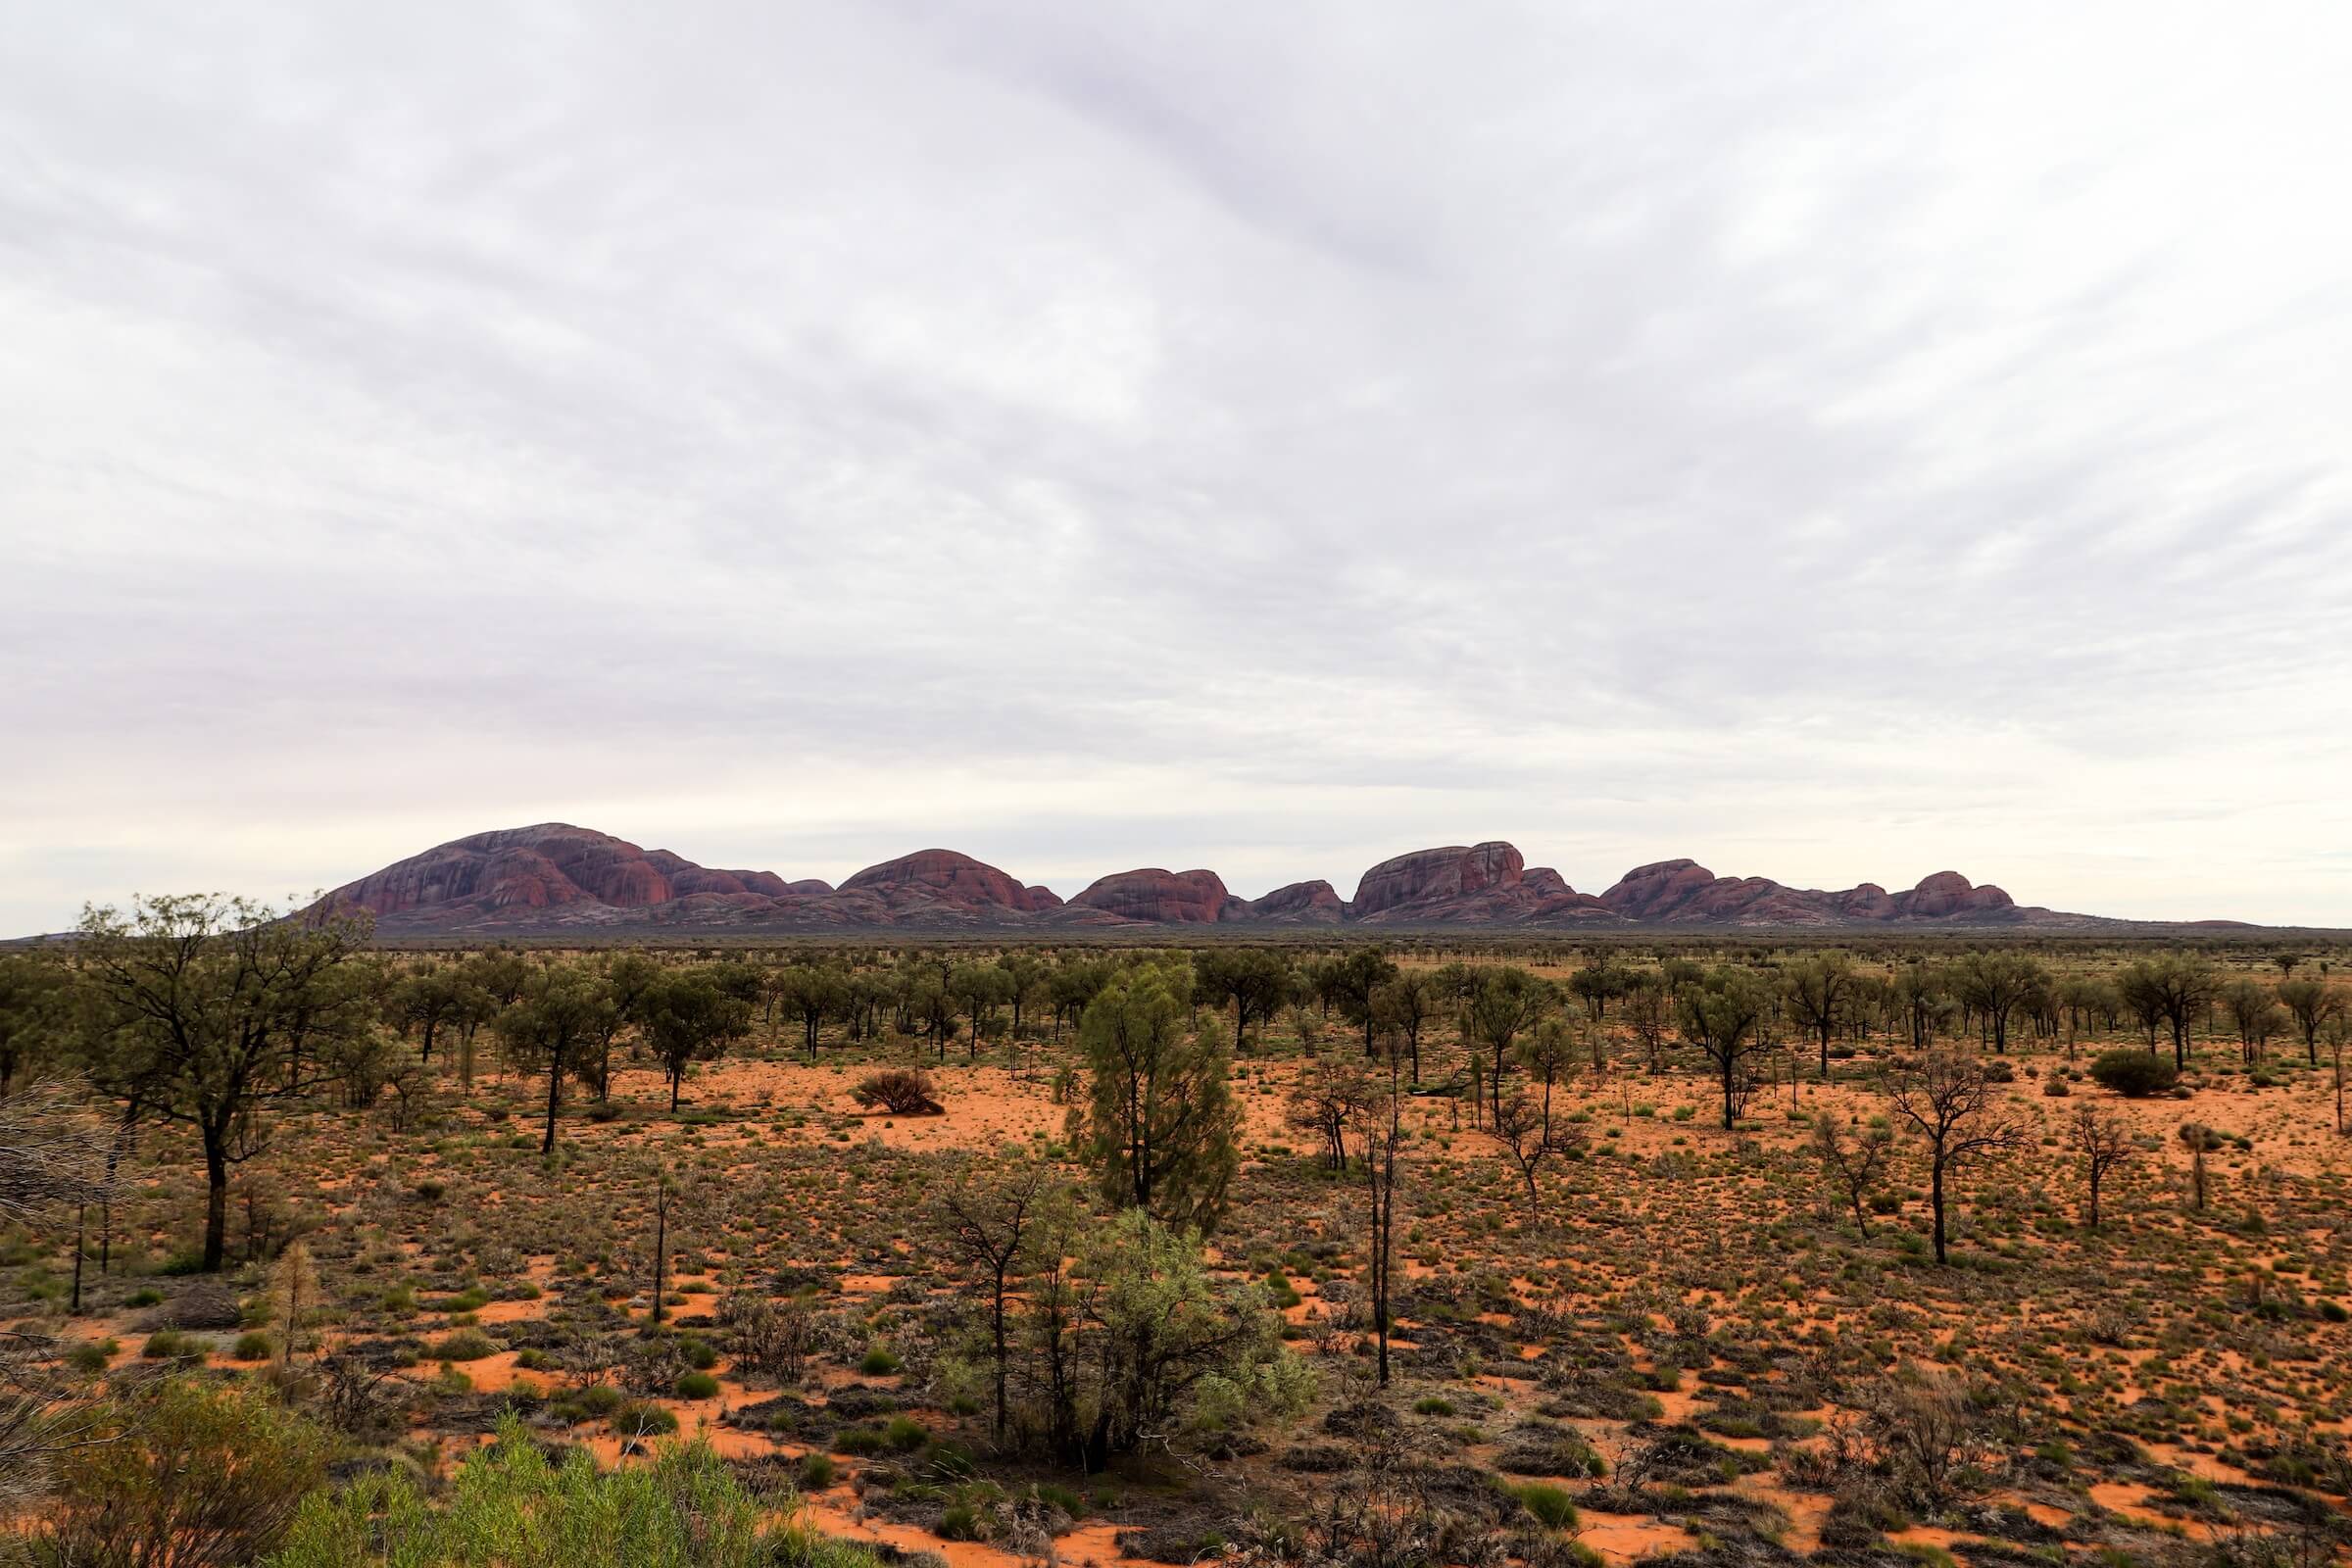 A desert landscape in the Northern Territory in Australia